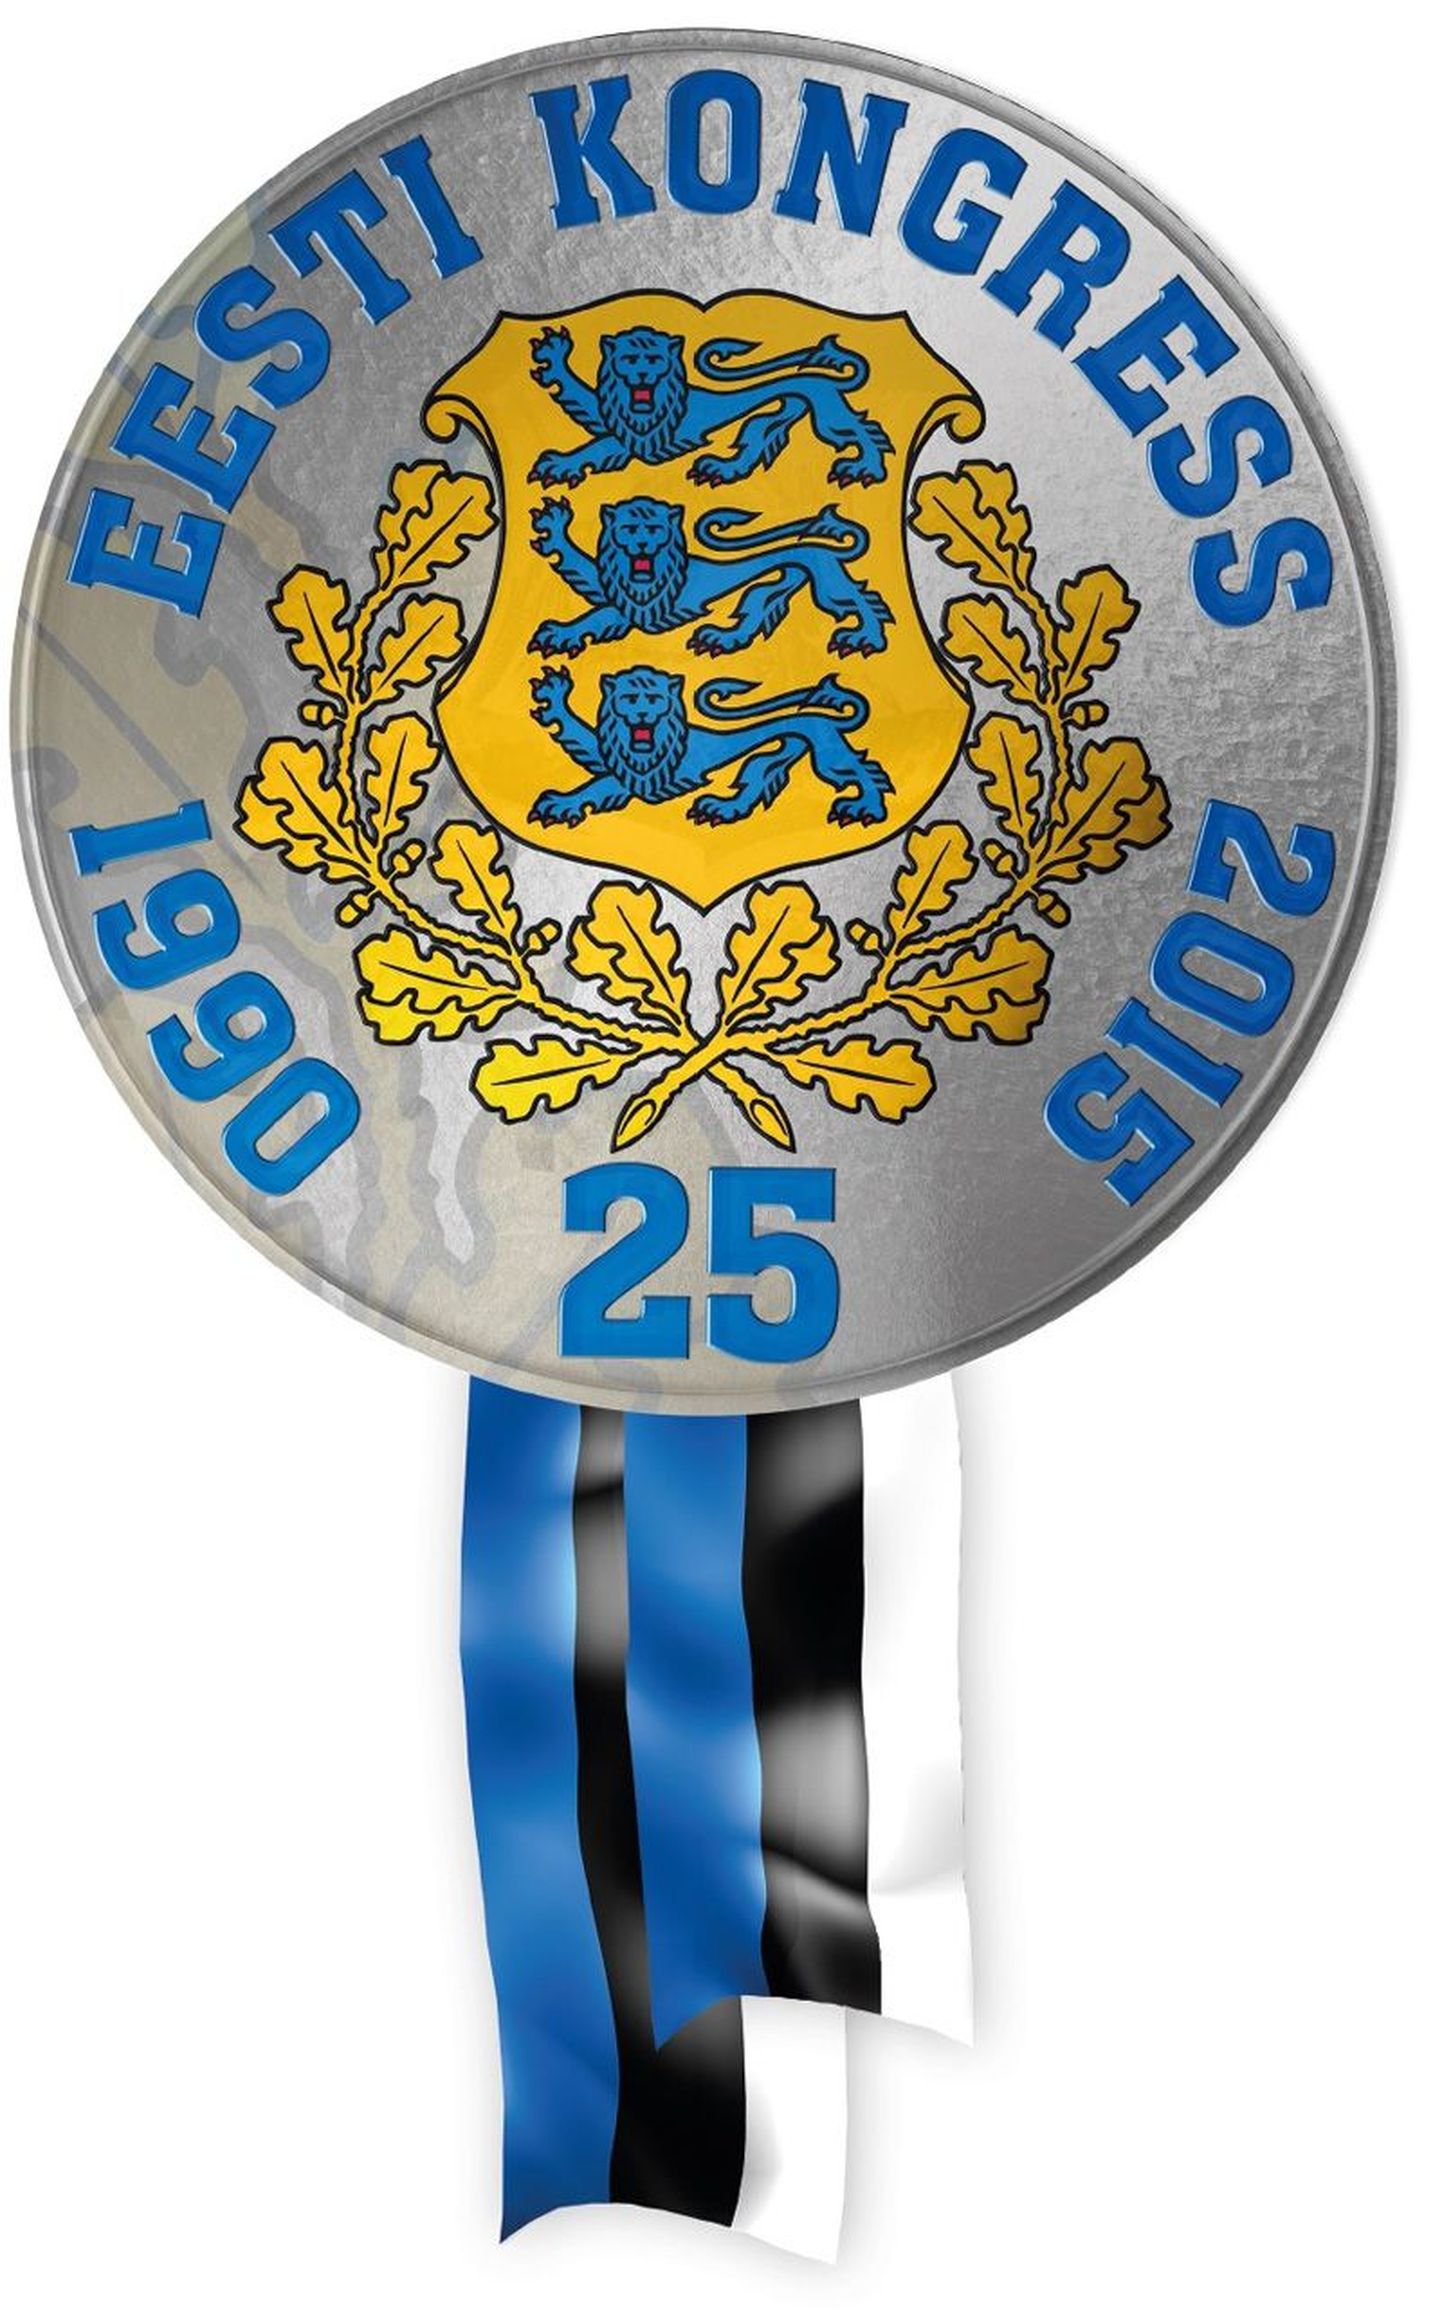 Eesti Kongress 25.